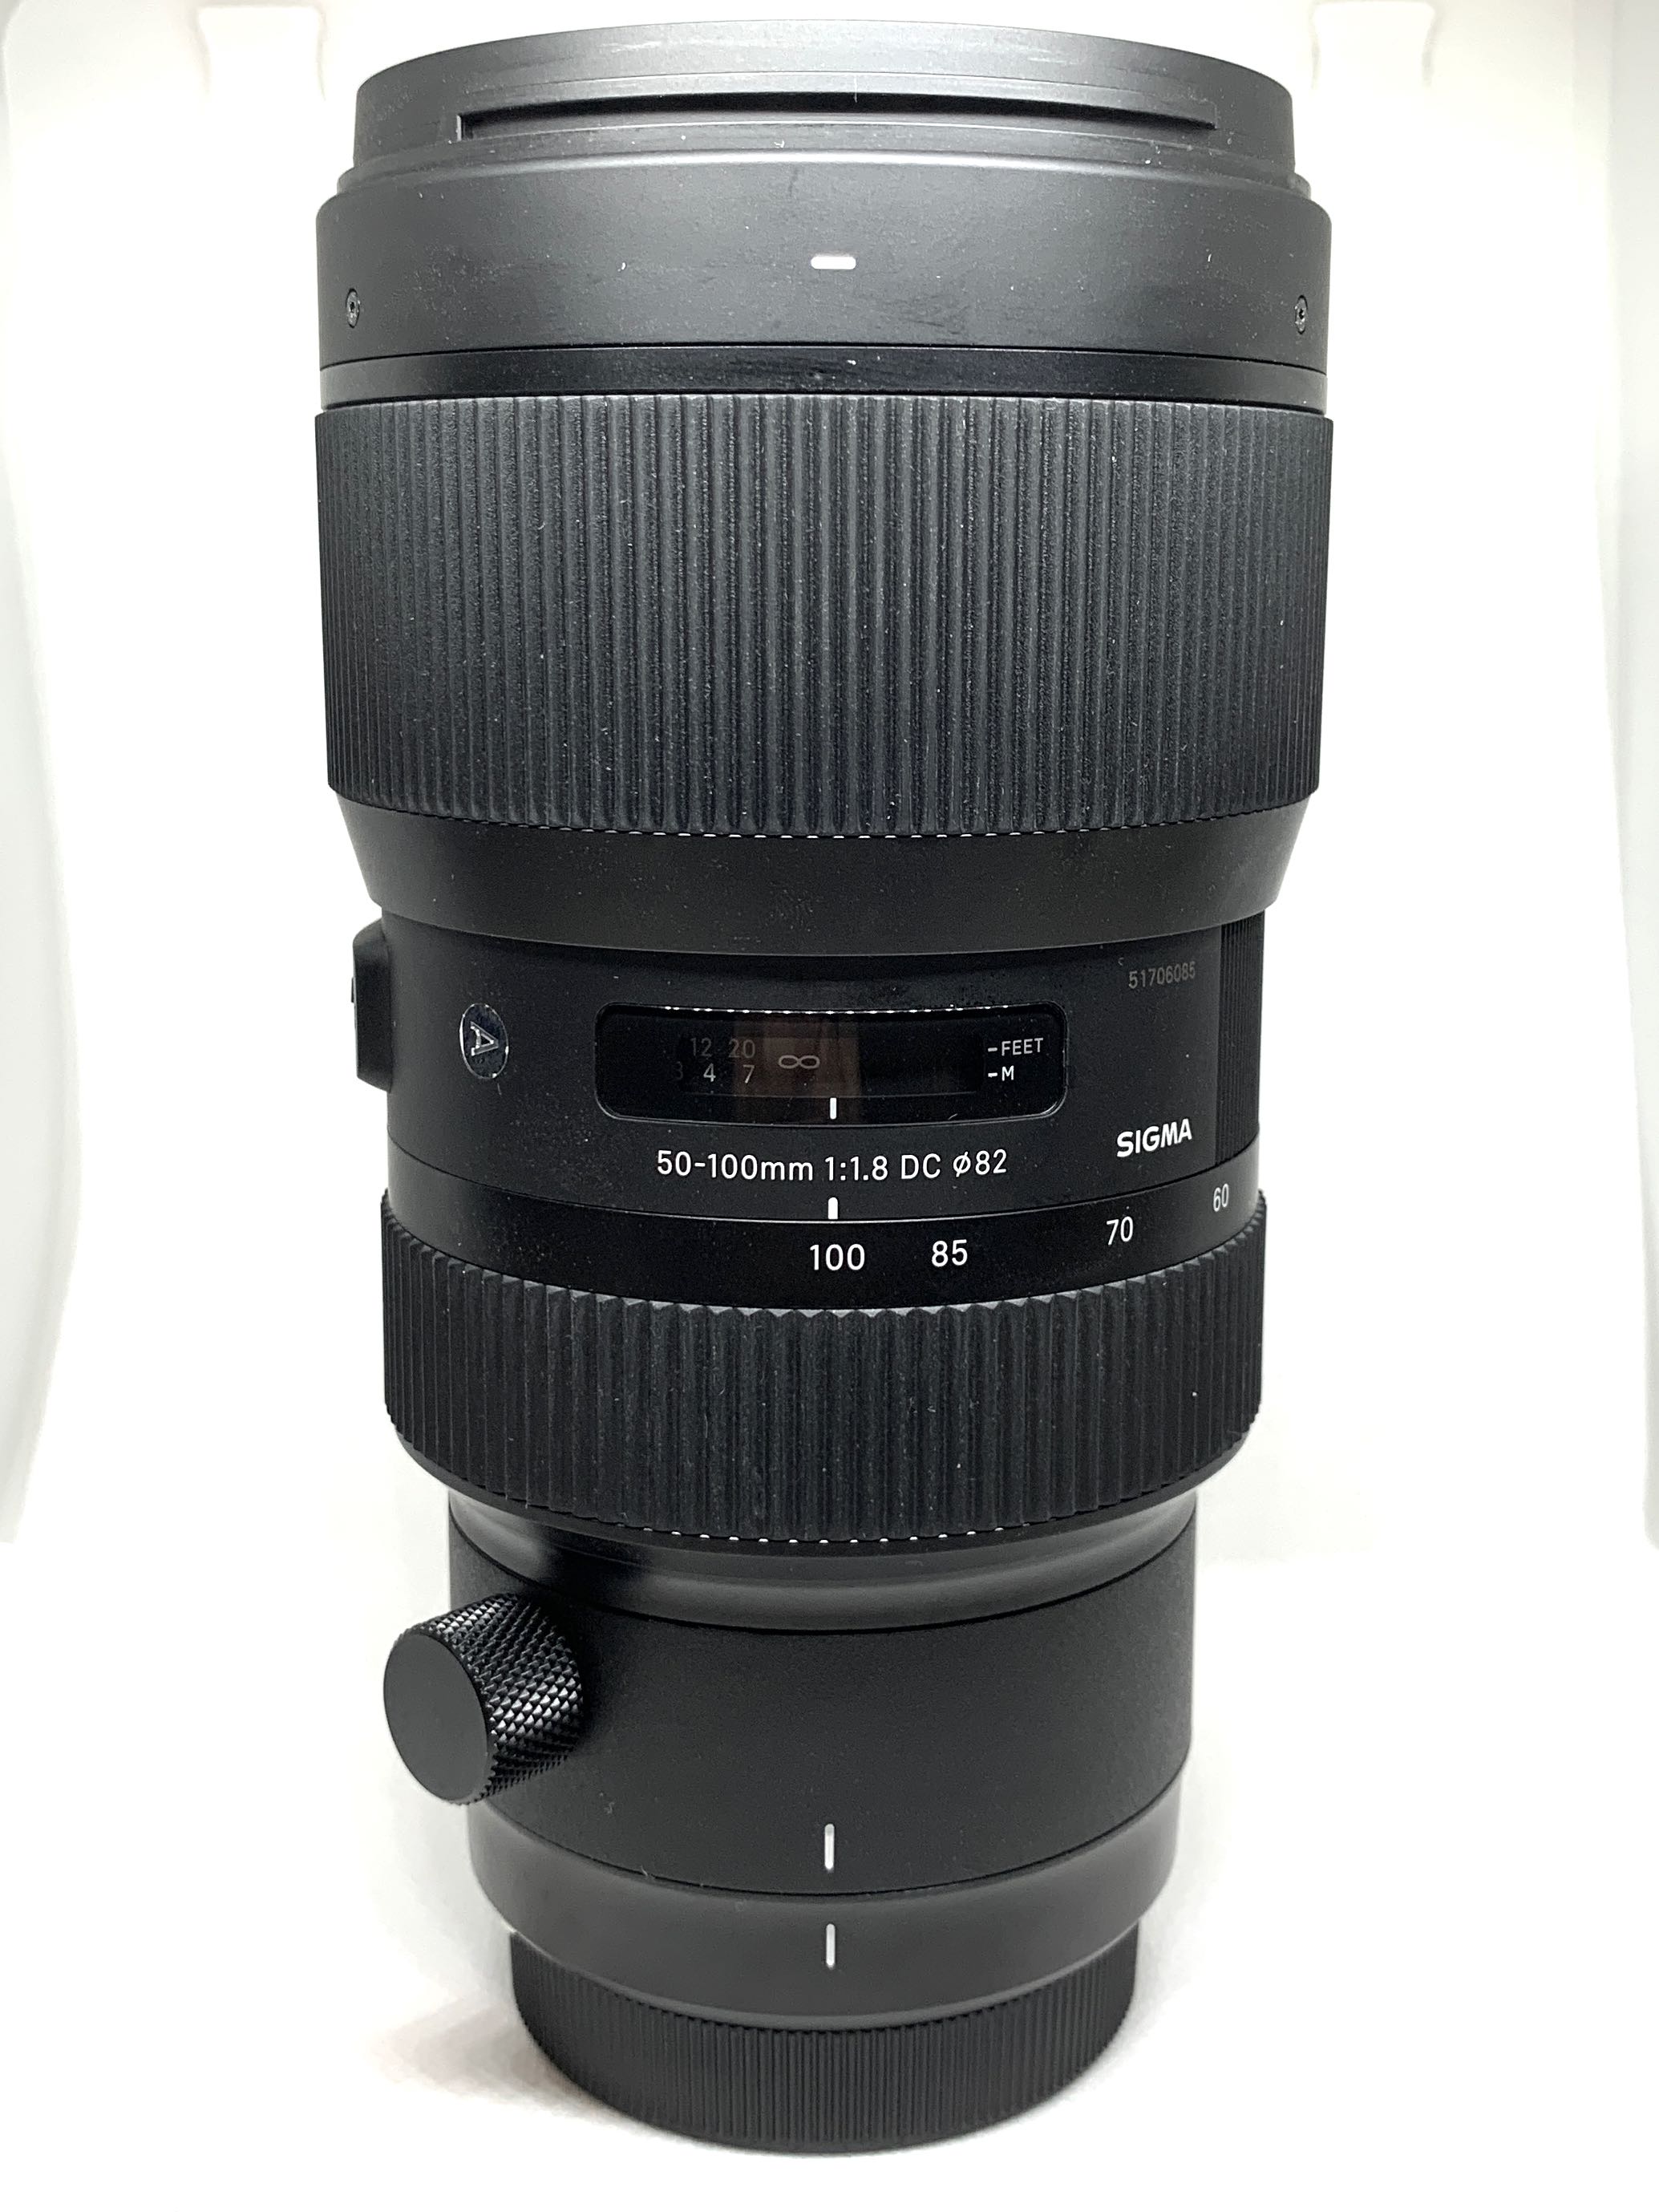 Sigma 50-100mm f1.8 Art lens (Canon mount)